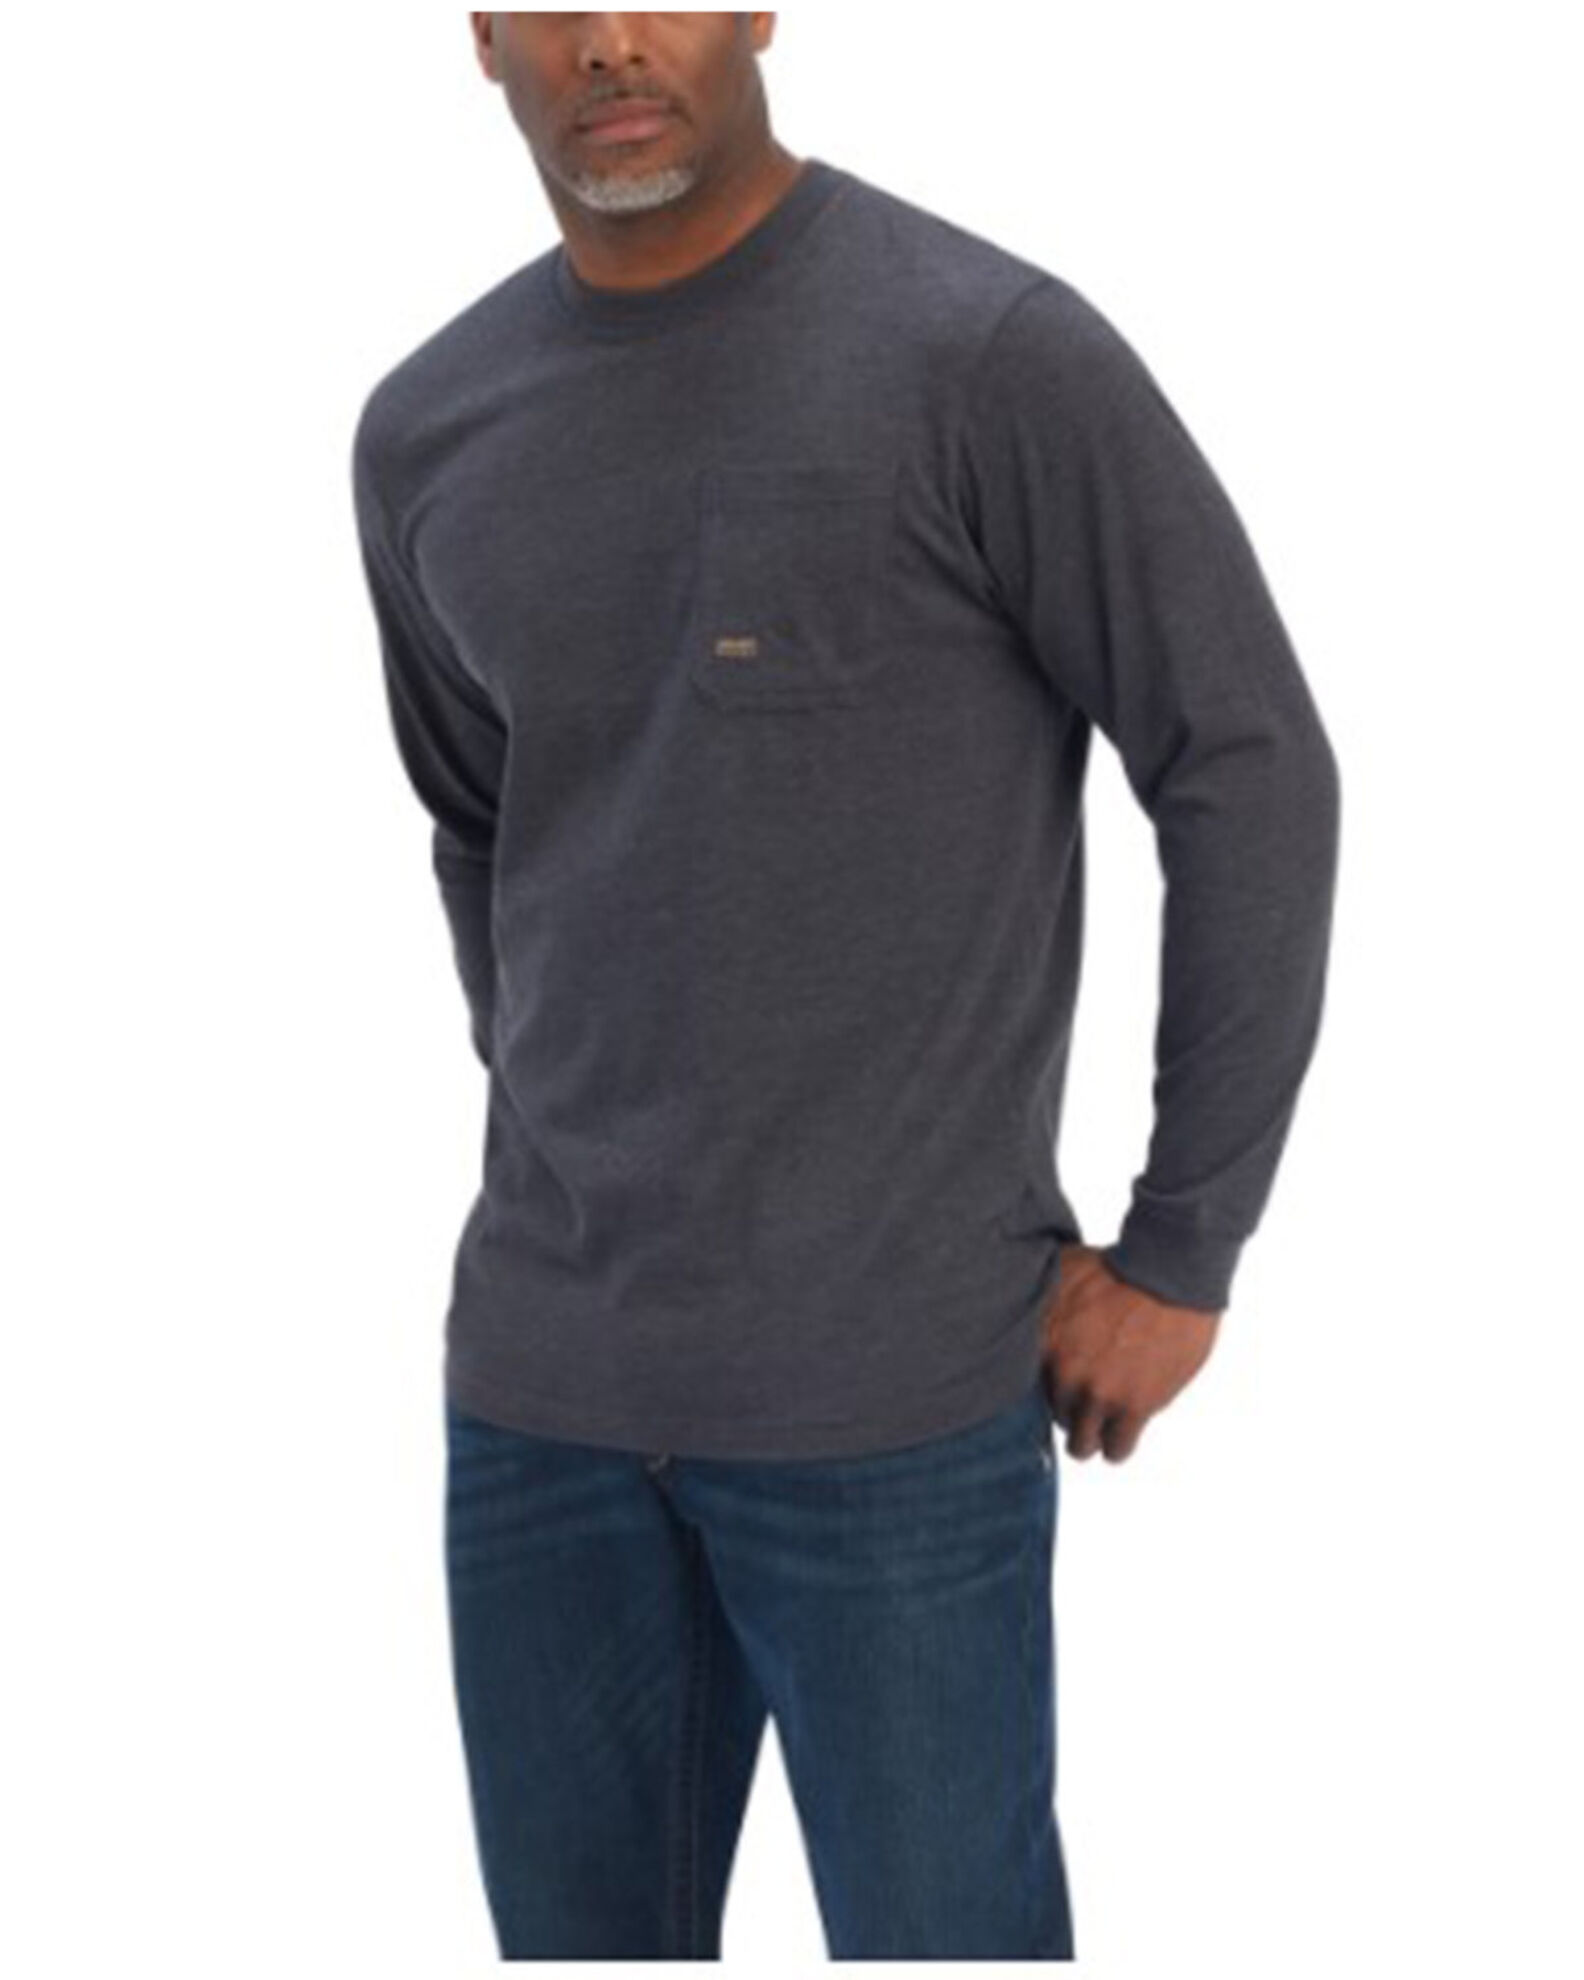 Ariat Men's Rebar Cotton Strong American Raptor Long Sleeve Graphic Work T-Shirt